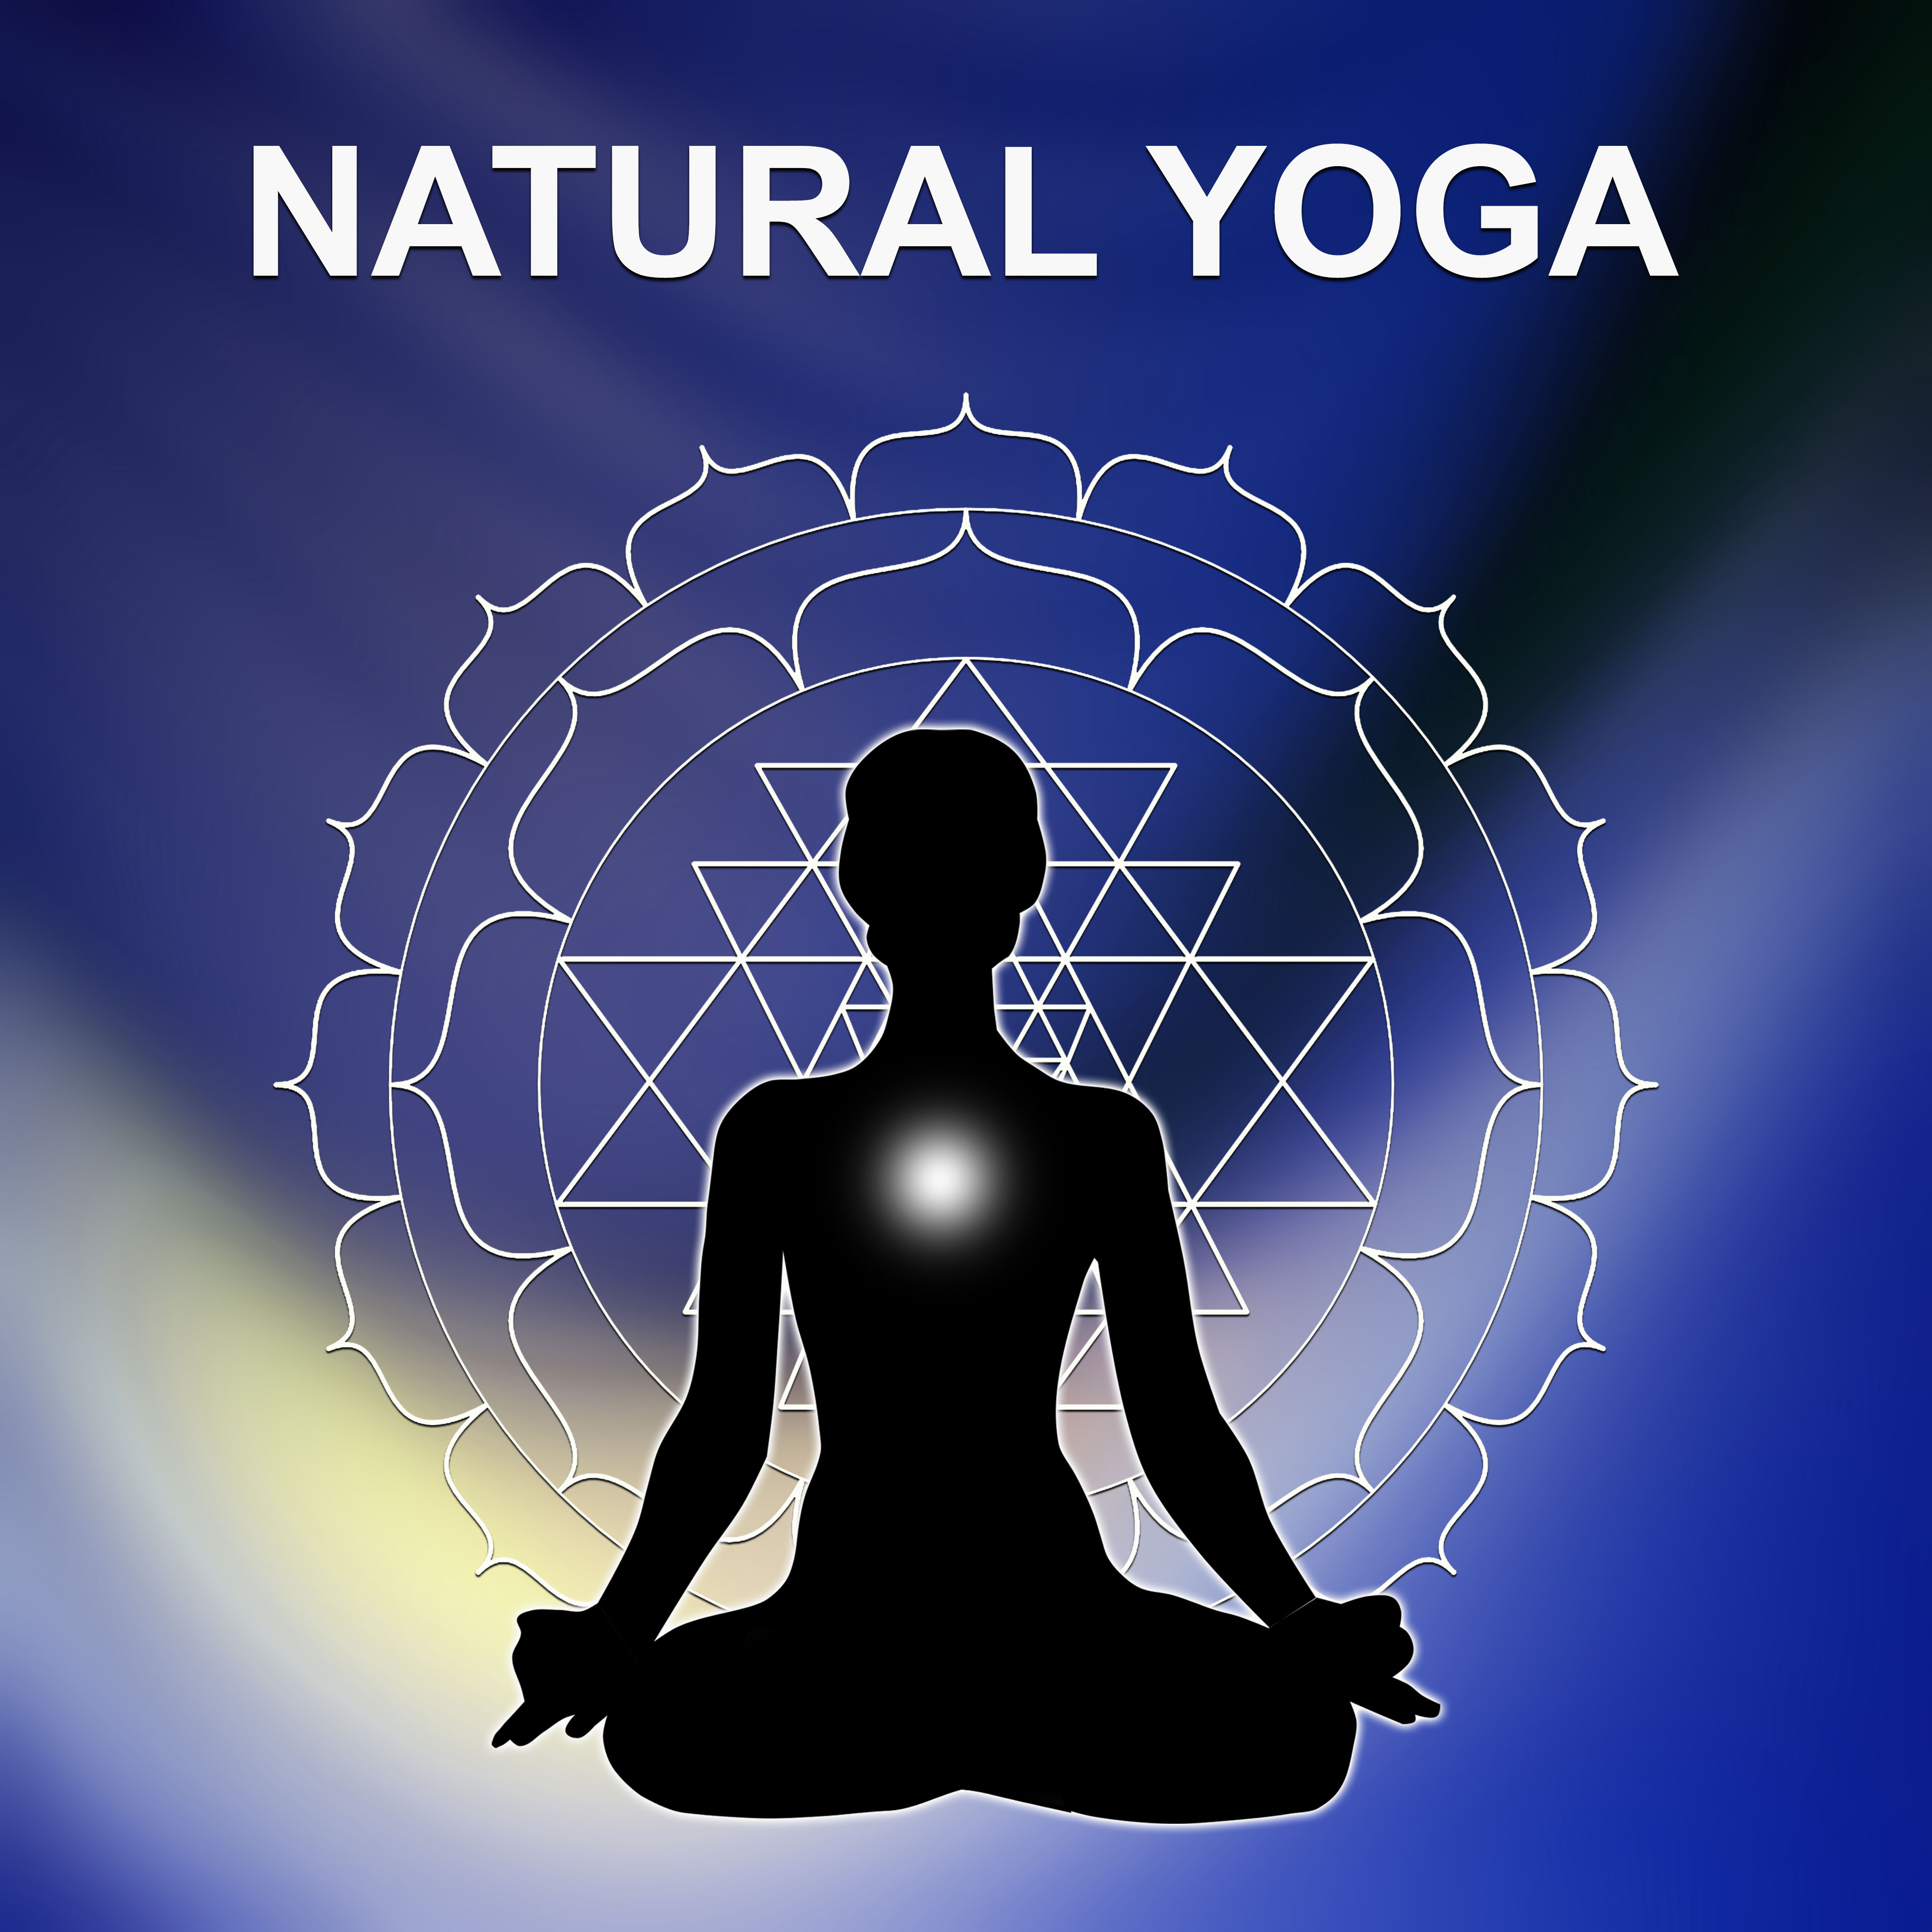 Natural Yoga  Morning Salutation, Meditation Music, Sounds of Nature, Relax